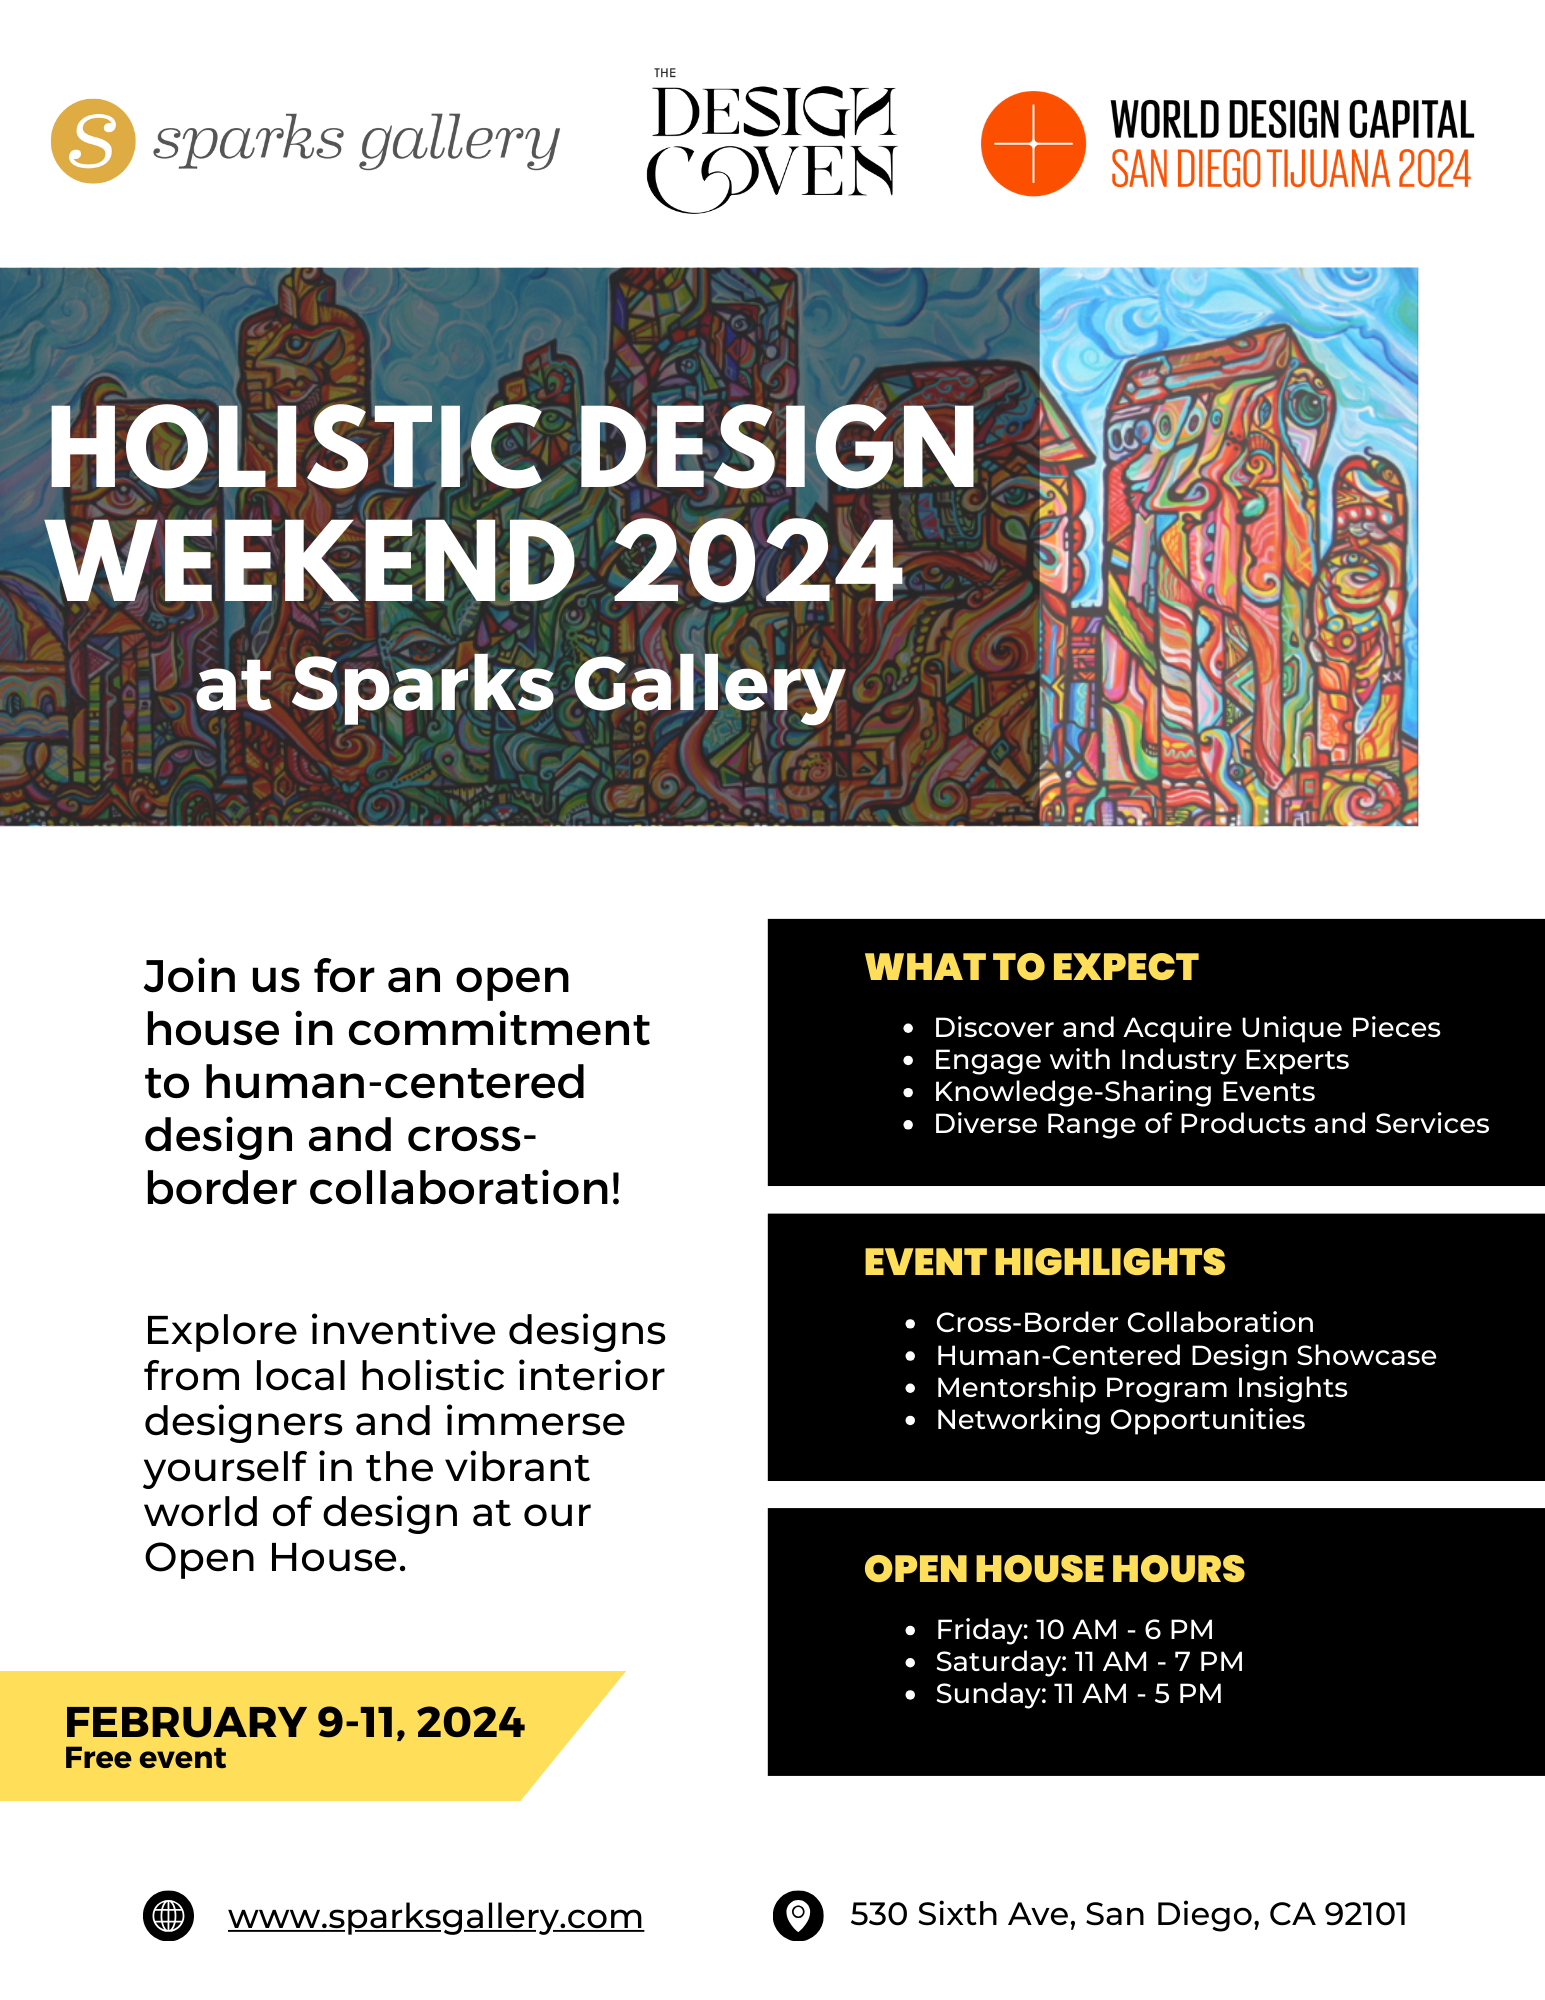 Celebrating Holistic Design Weekend 2024 at Sparks Gallery